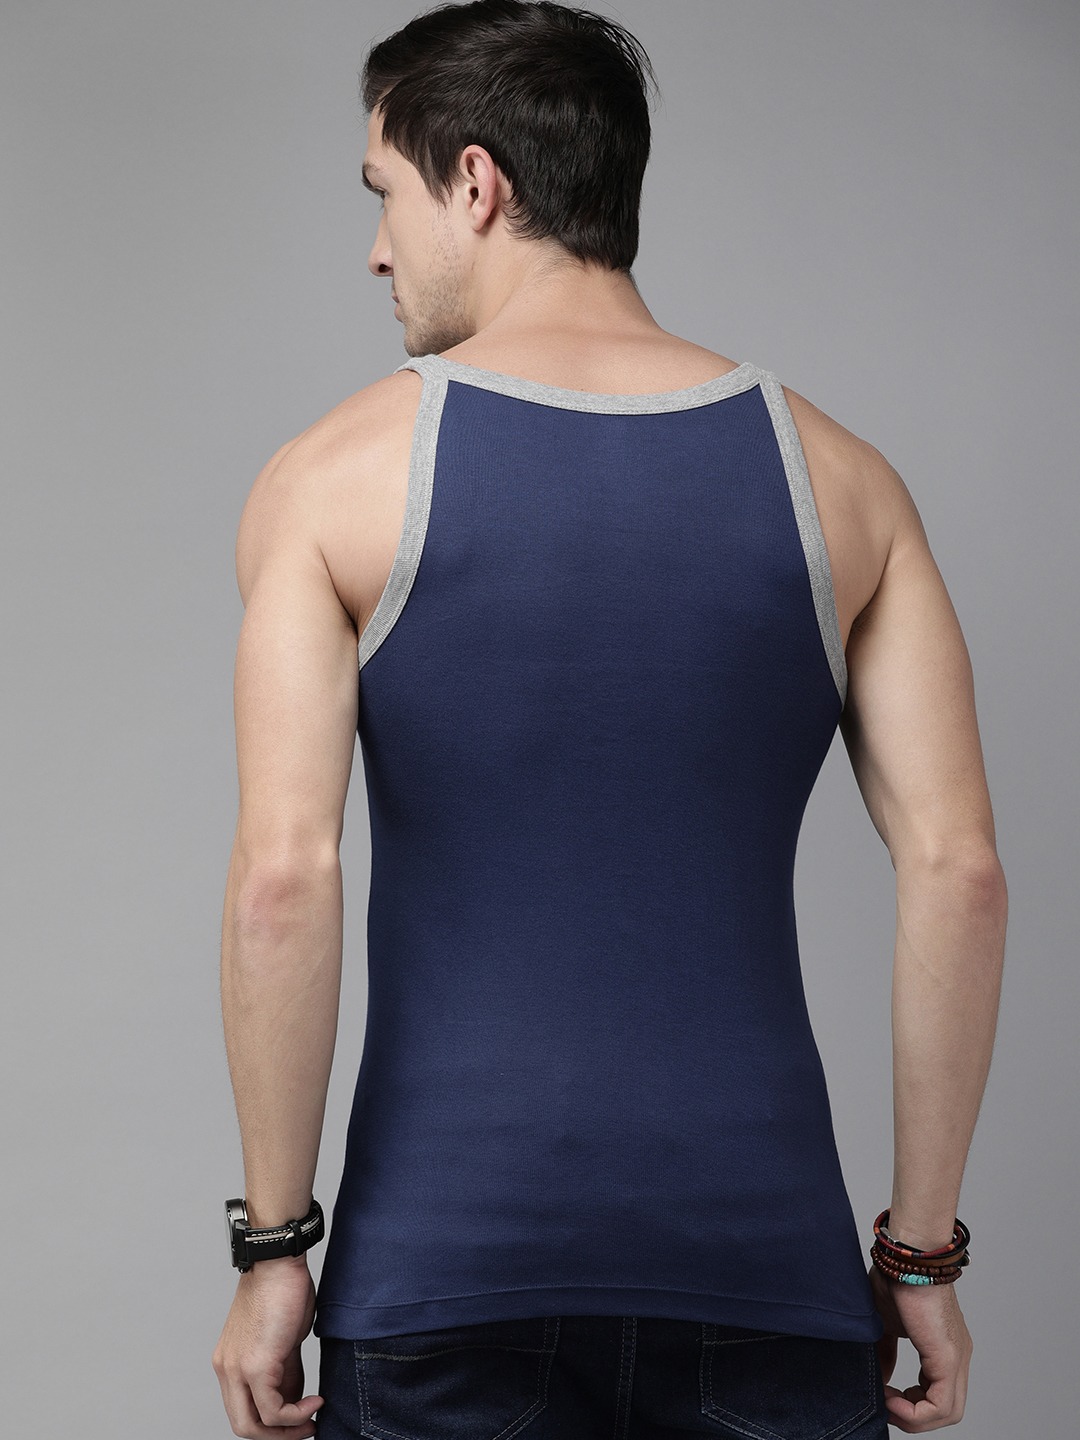 Clothing Innerwear Vests | Roadster Men Pack of 2 Solid Pure Cotton Innerwear Vests - IJ44134